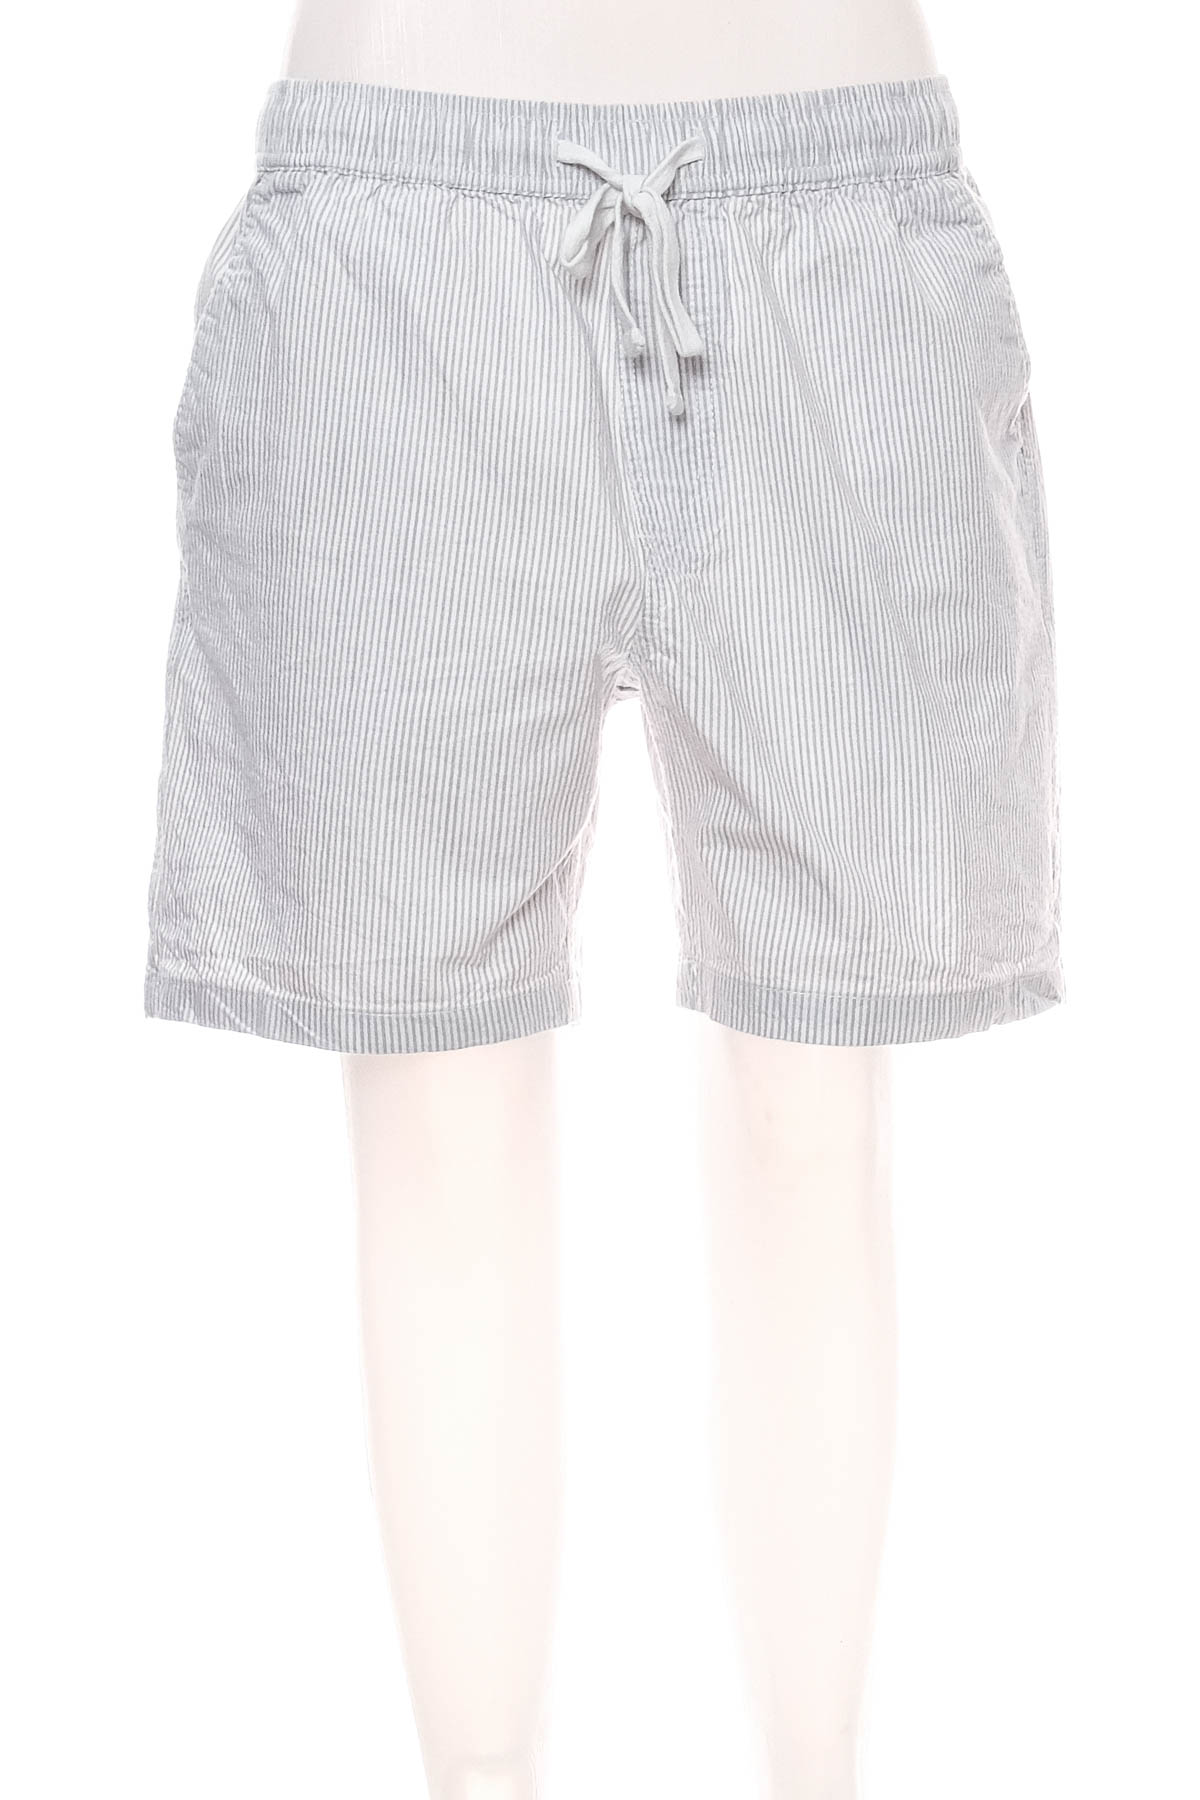 Female shorts - Cotton On Garments - 0